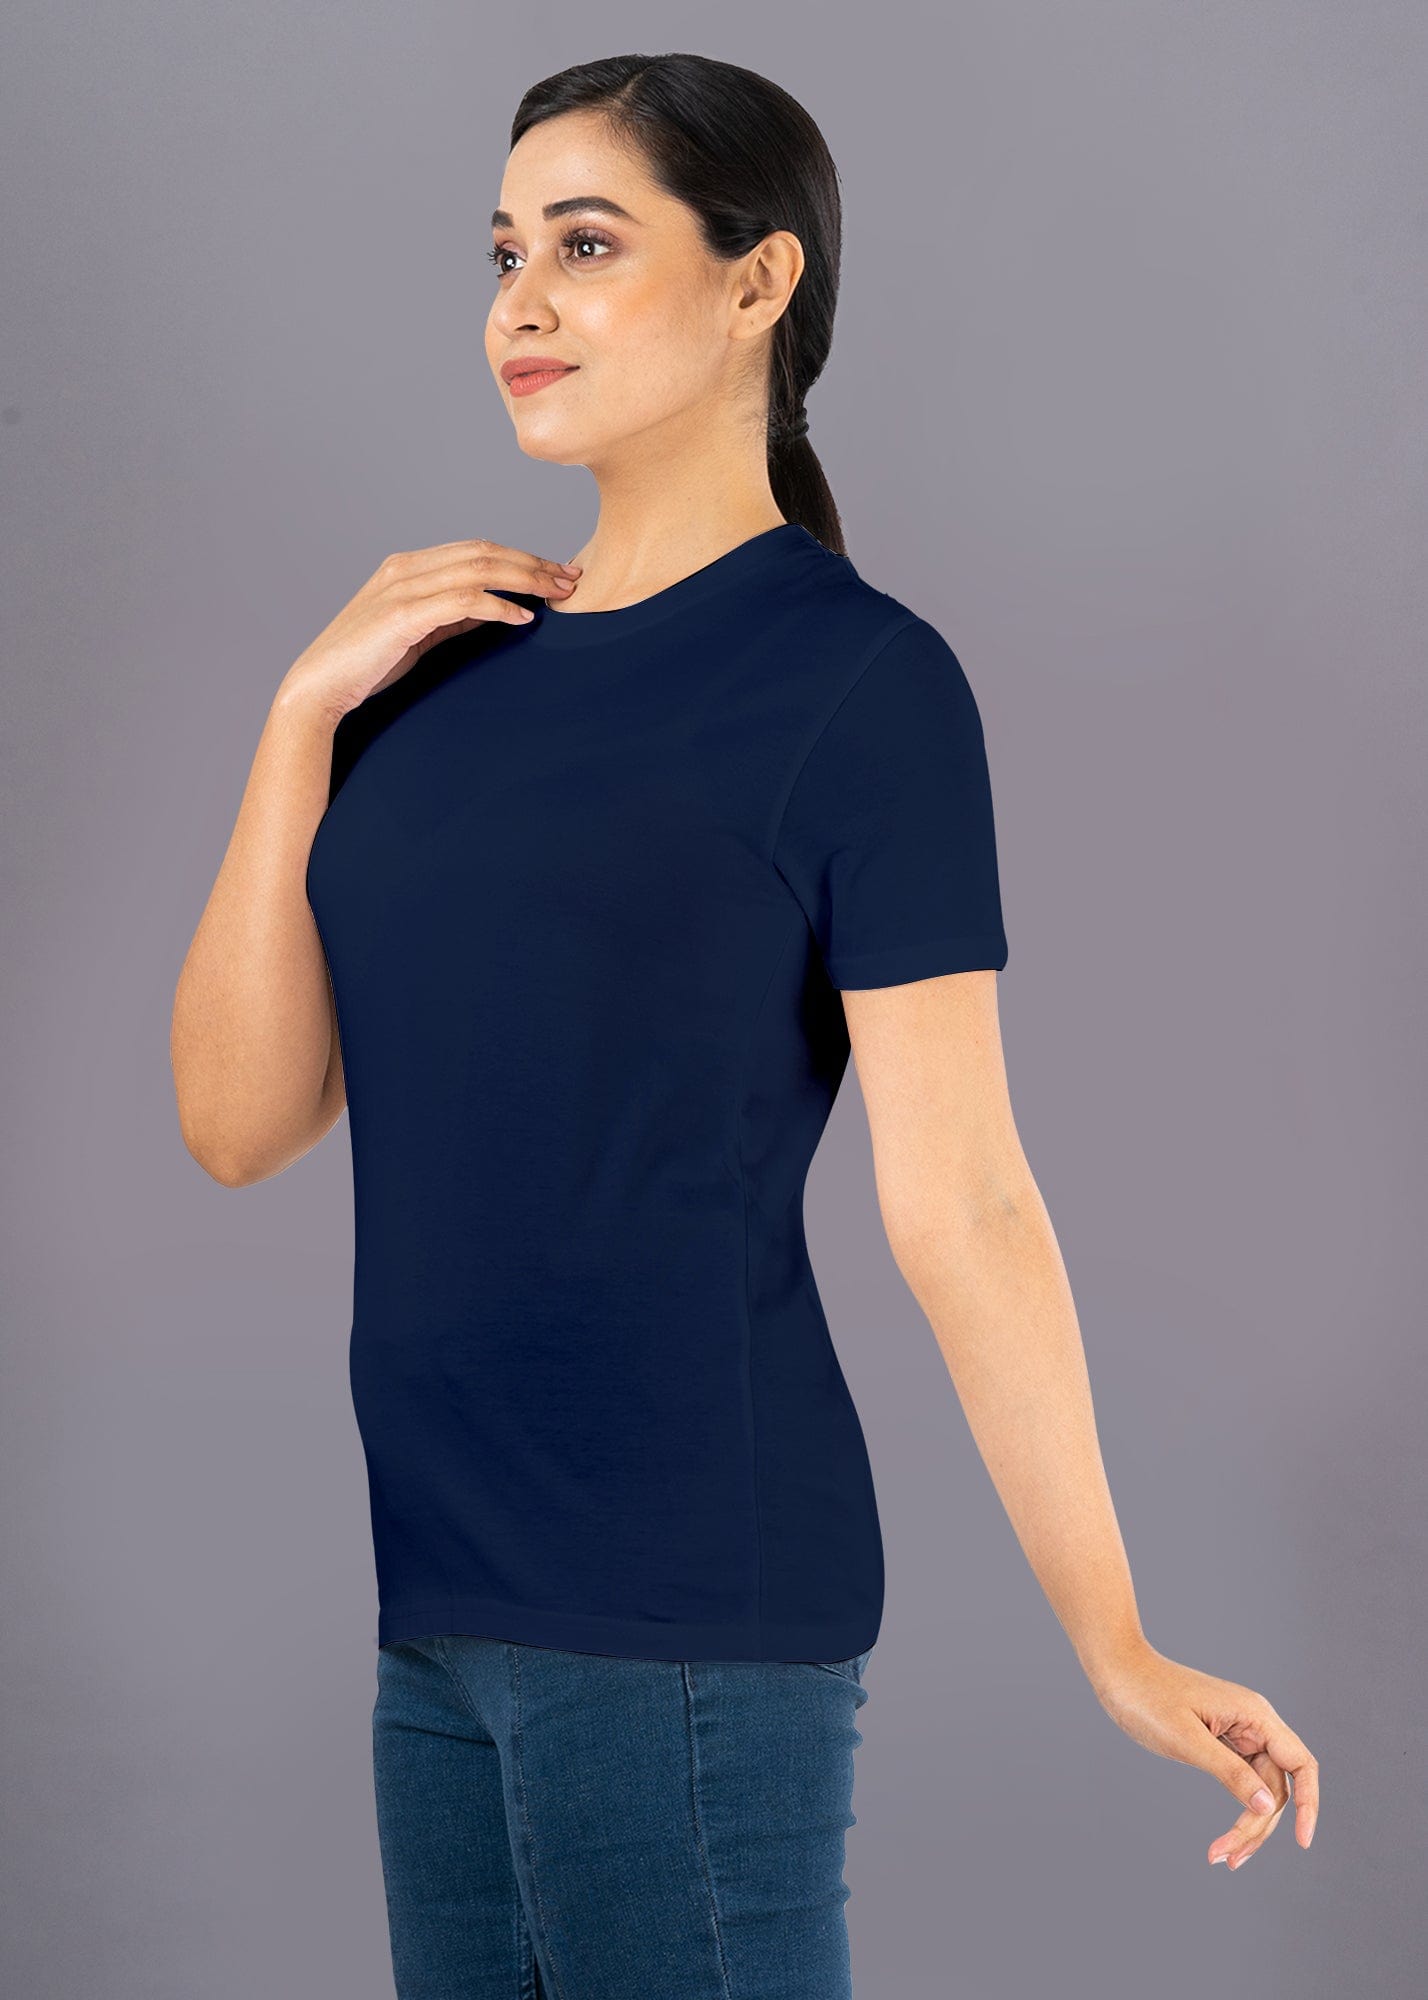 Solid Half Sleeve Premium Cotton T-shirt For Women - Regular Fit